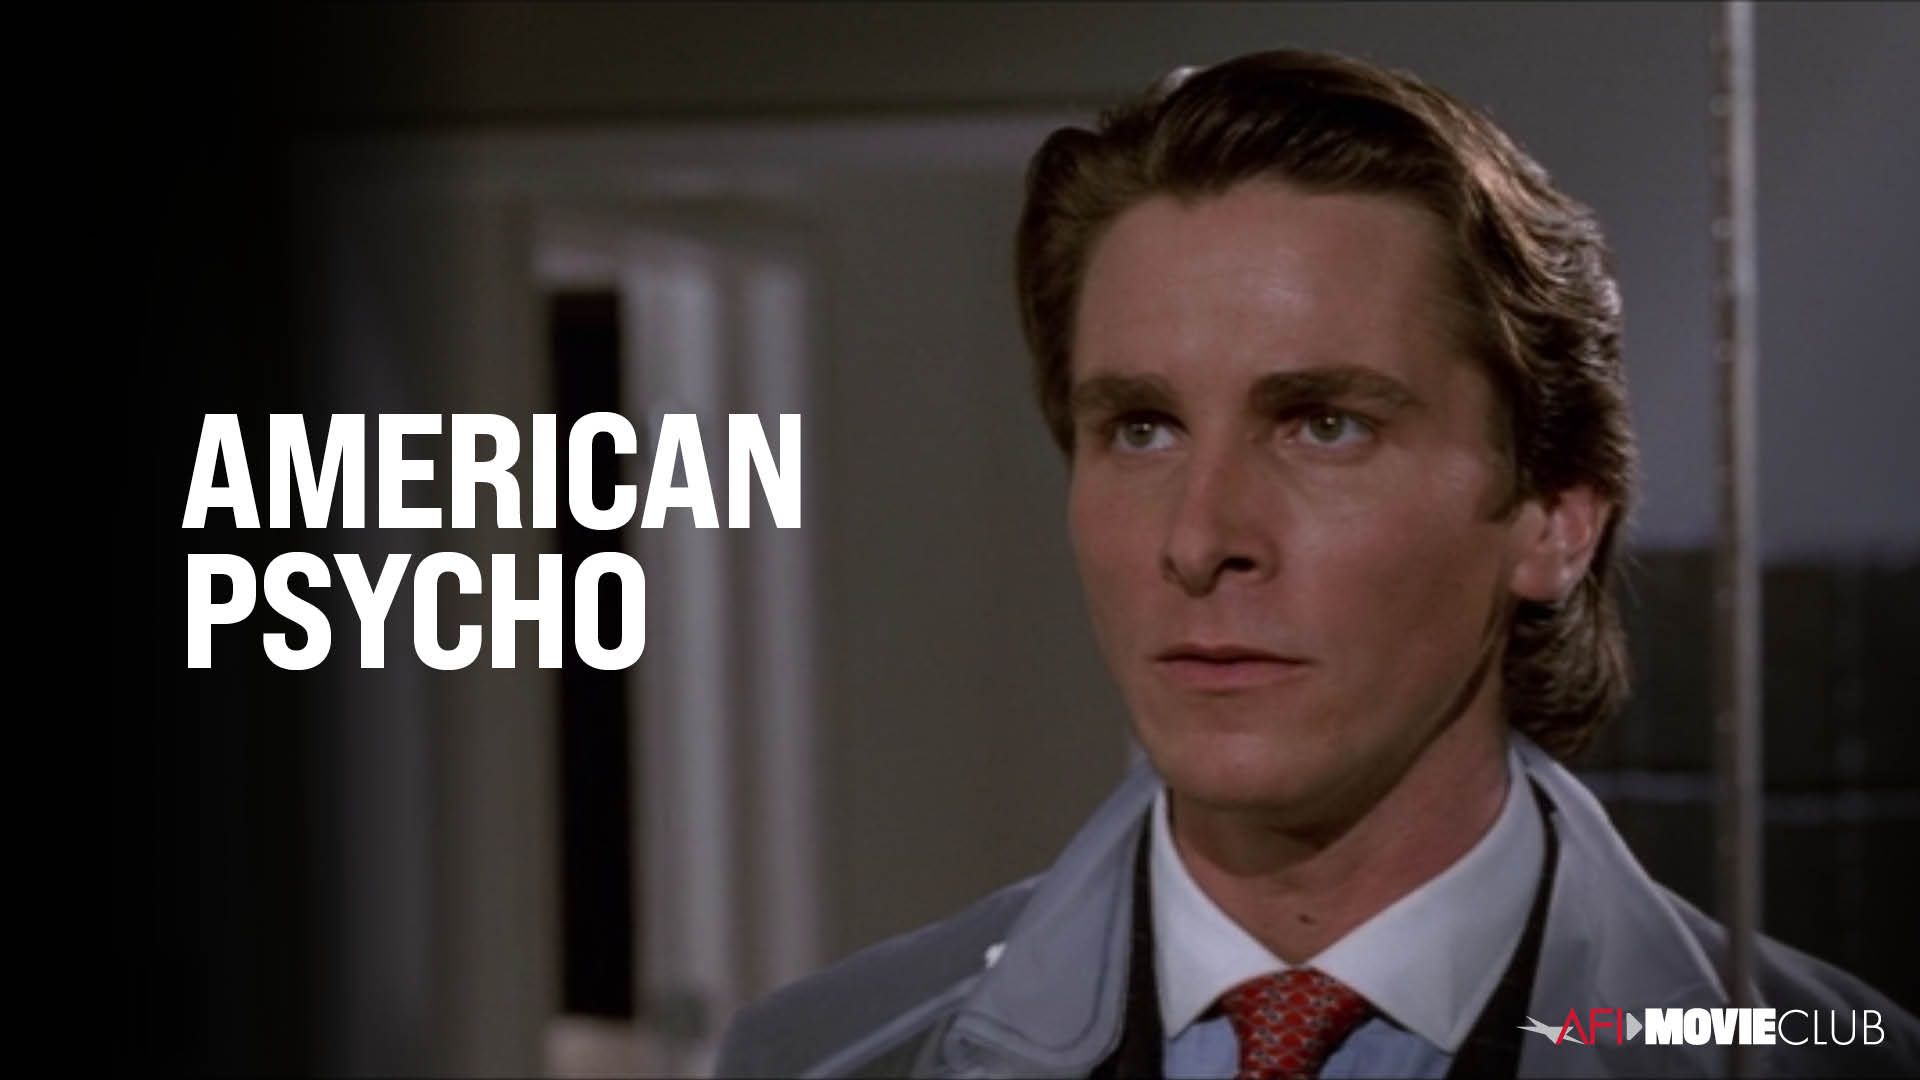 American Psycho Film Still - Christian Bale